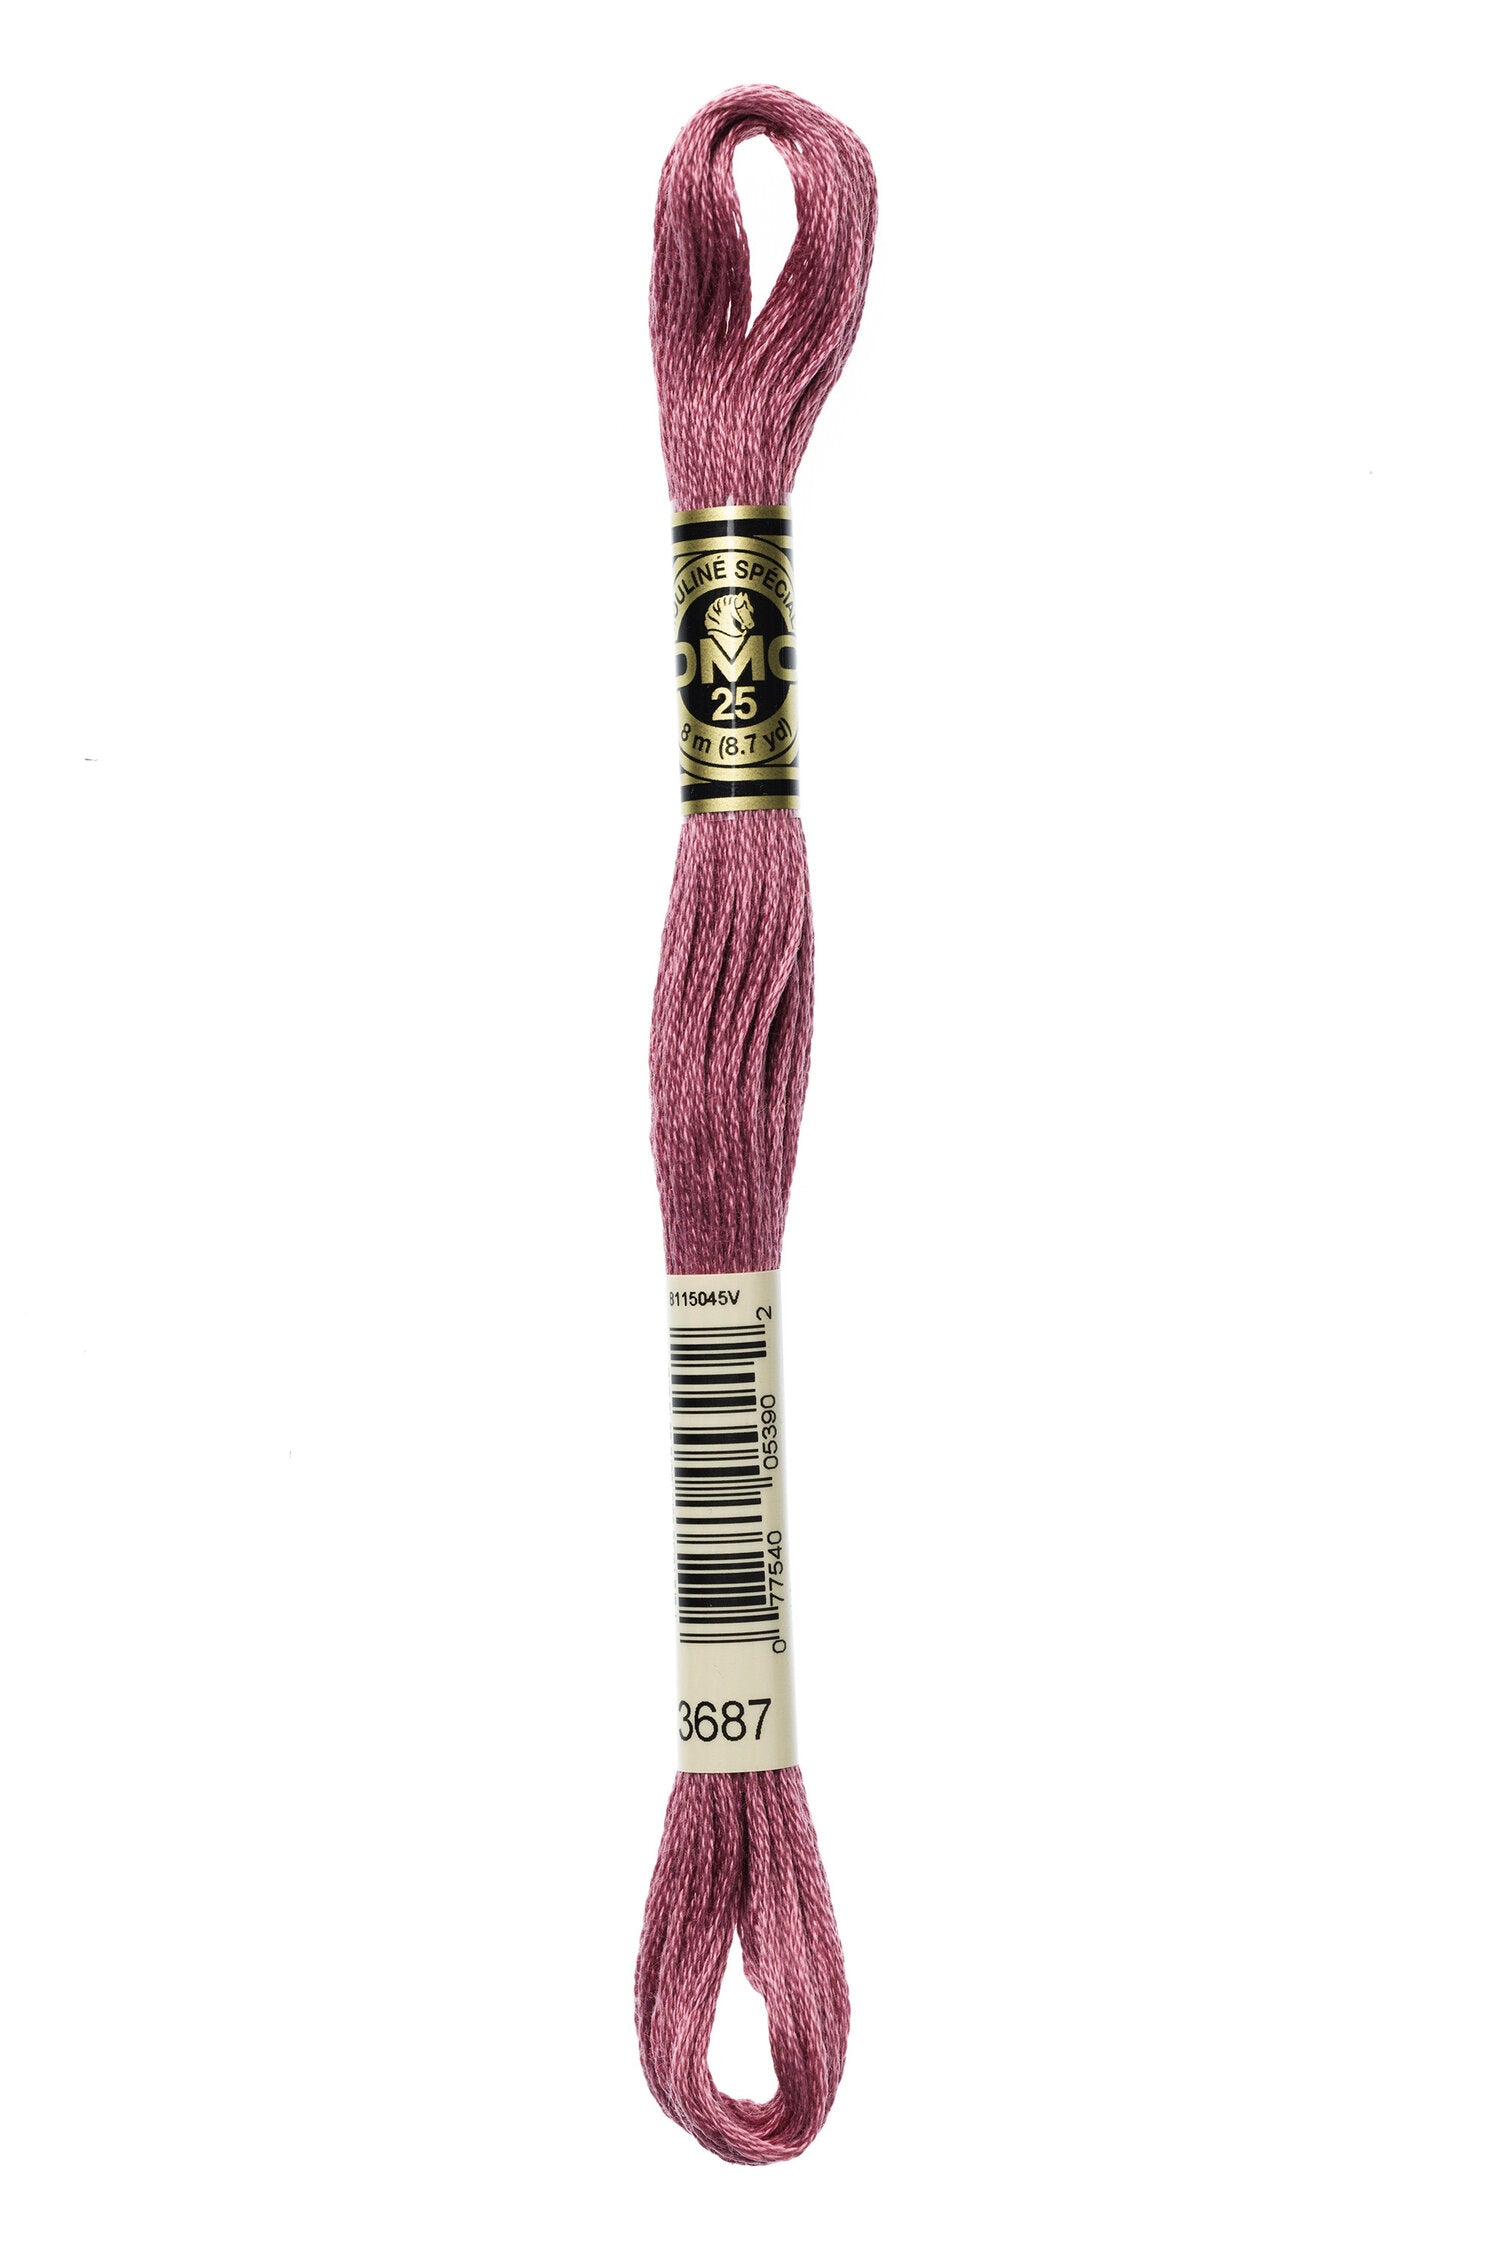 DMC 3687 - Mauve - DMC 6 Strand Embroidery Thread, Thread & Floss, Thread & Floss, The Crafty Grimalkin - A Cross Stitch Store